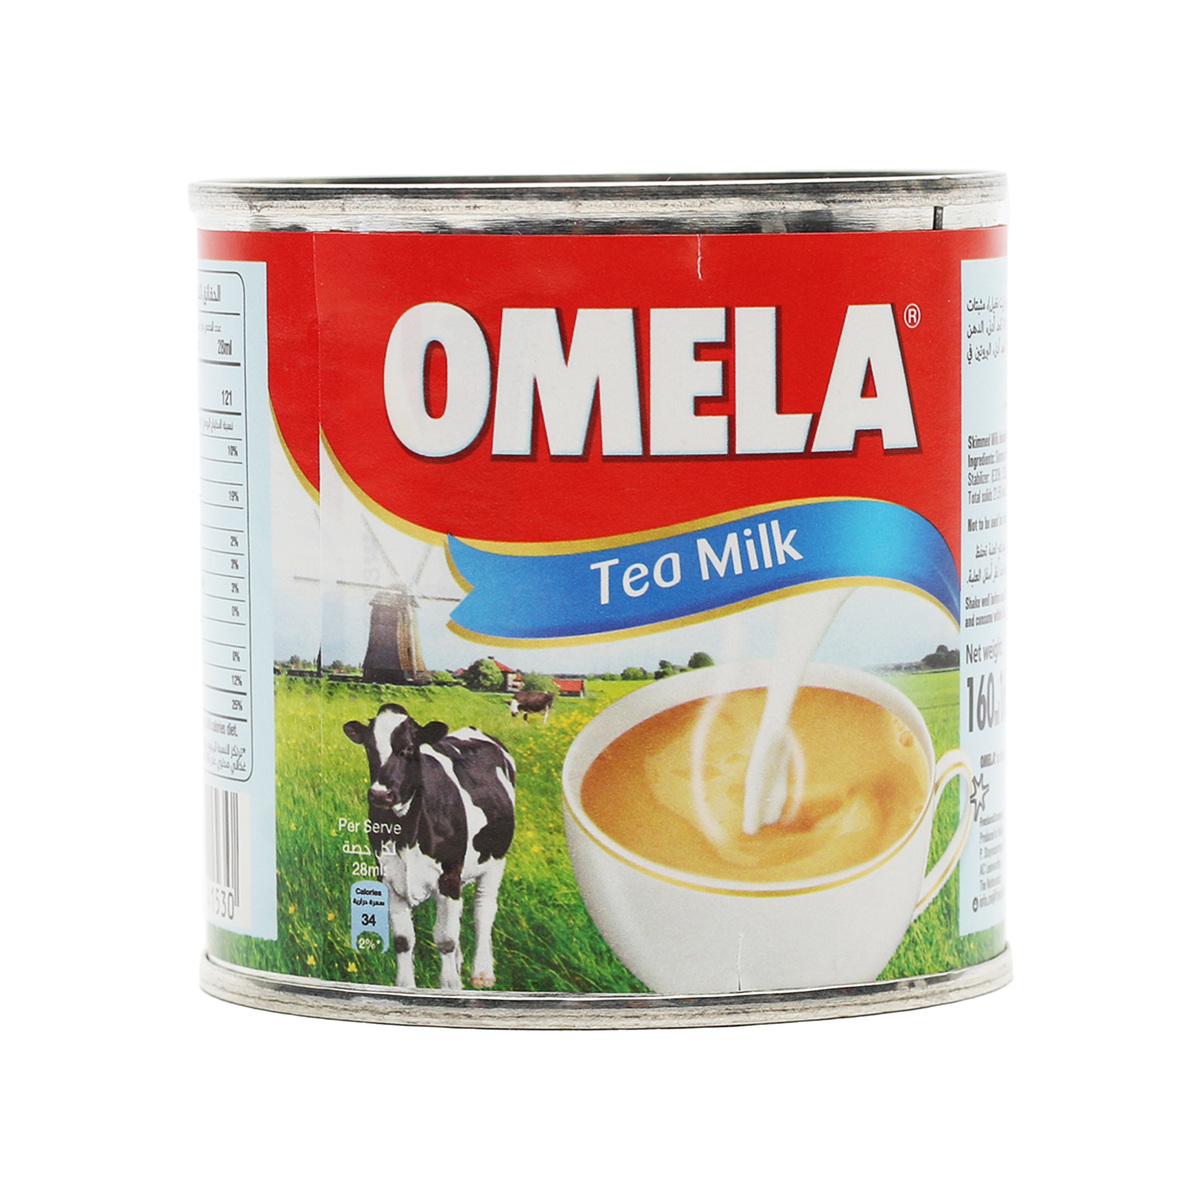 Omela Evaporated Milk Value Pack 12 x 169g